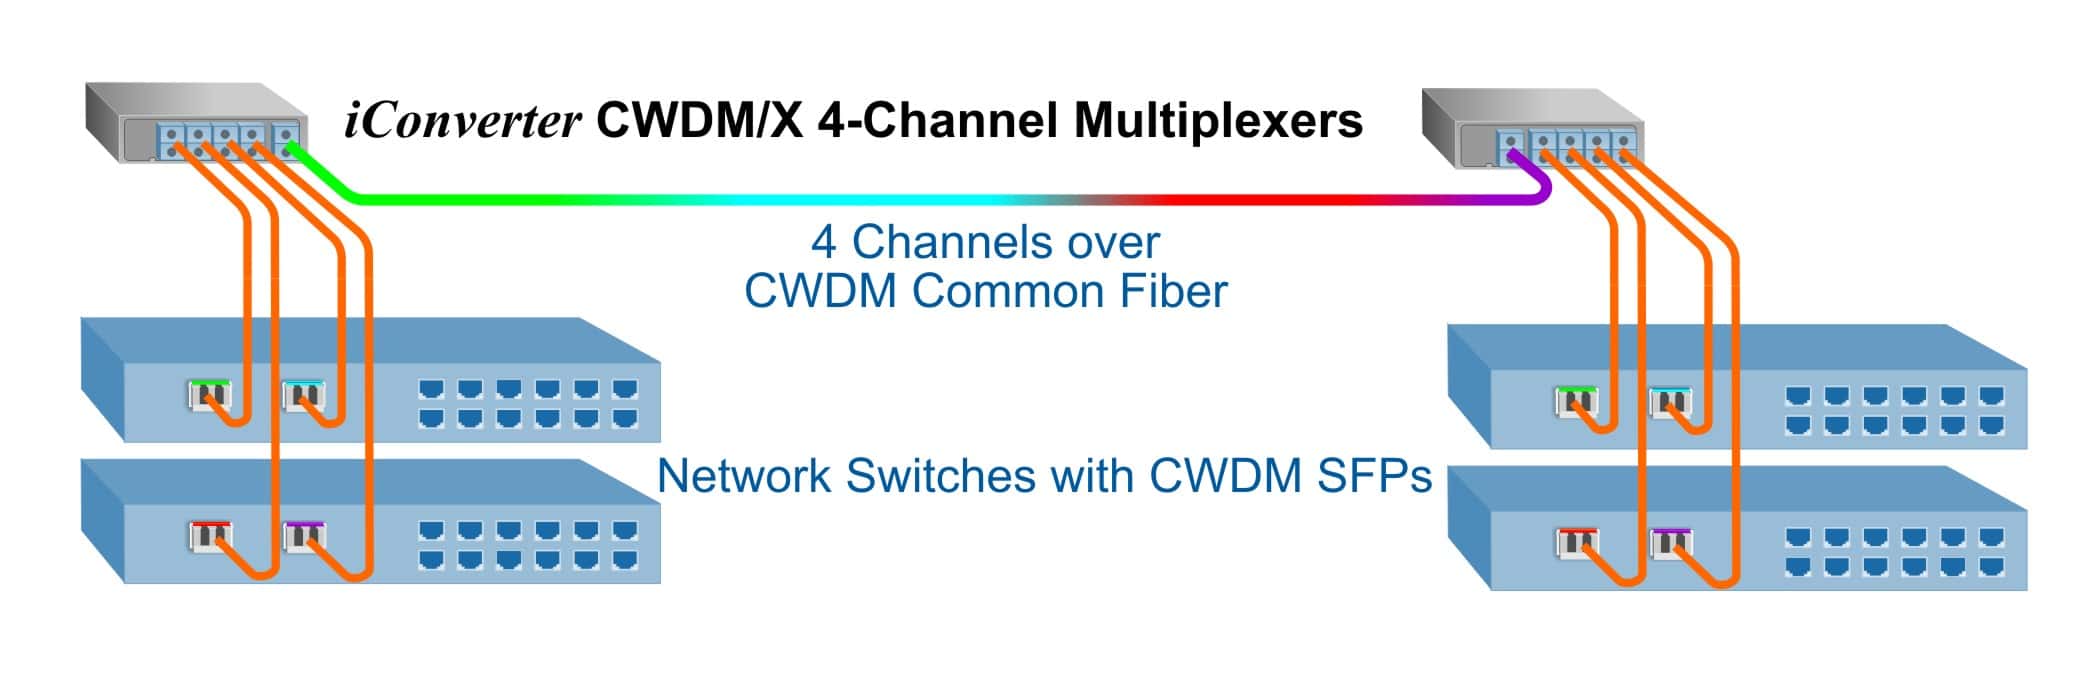 iConverter CWDM Multiplexer